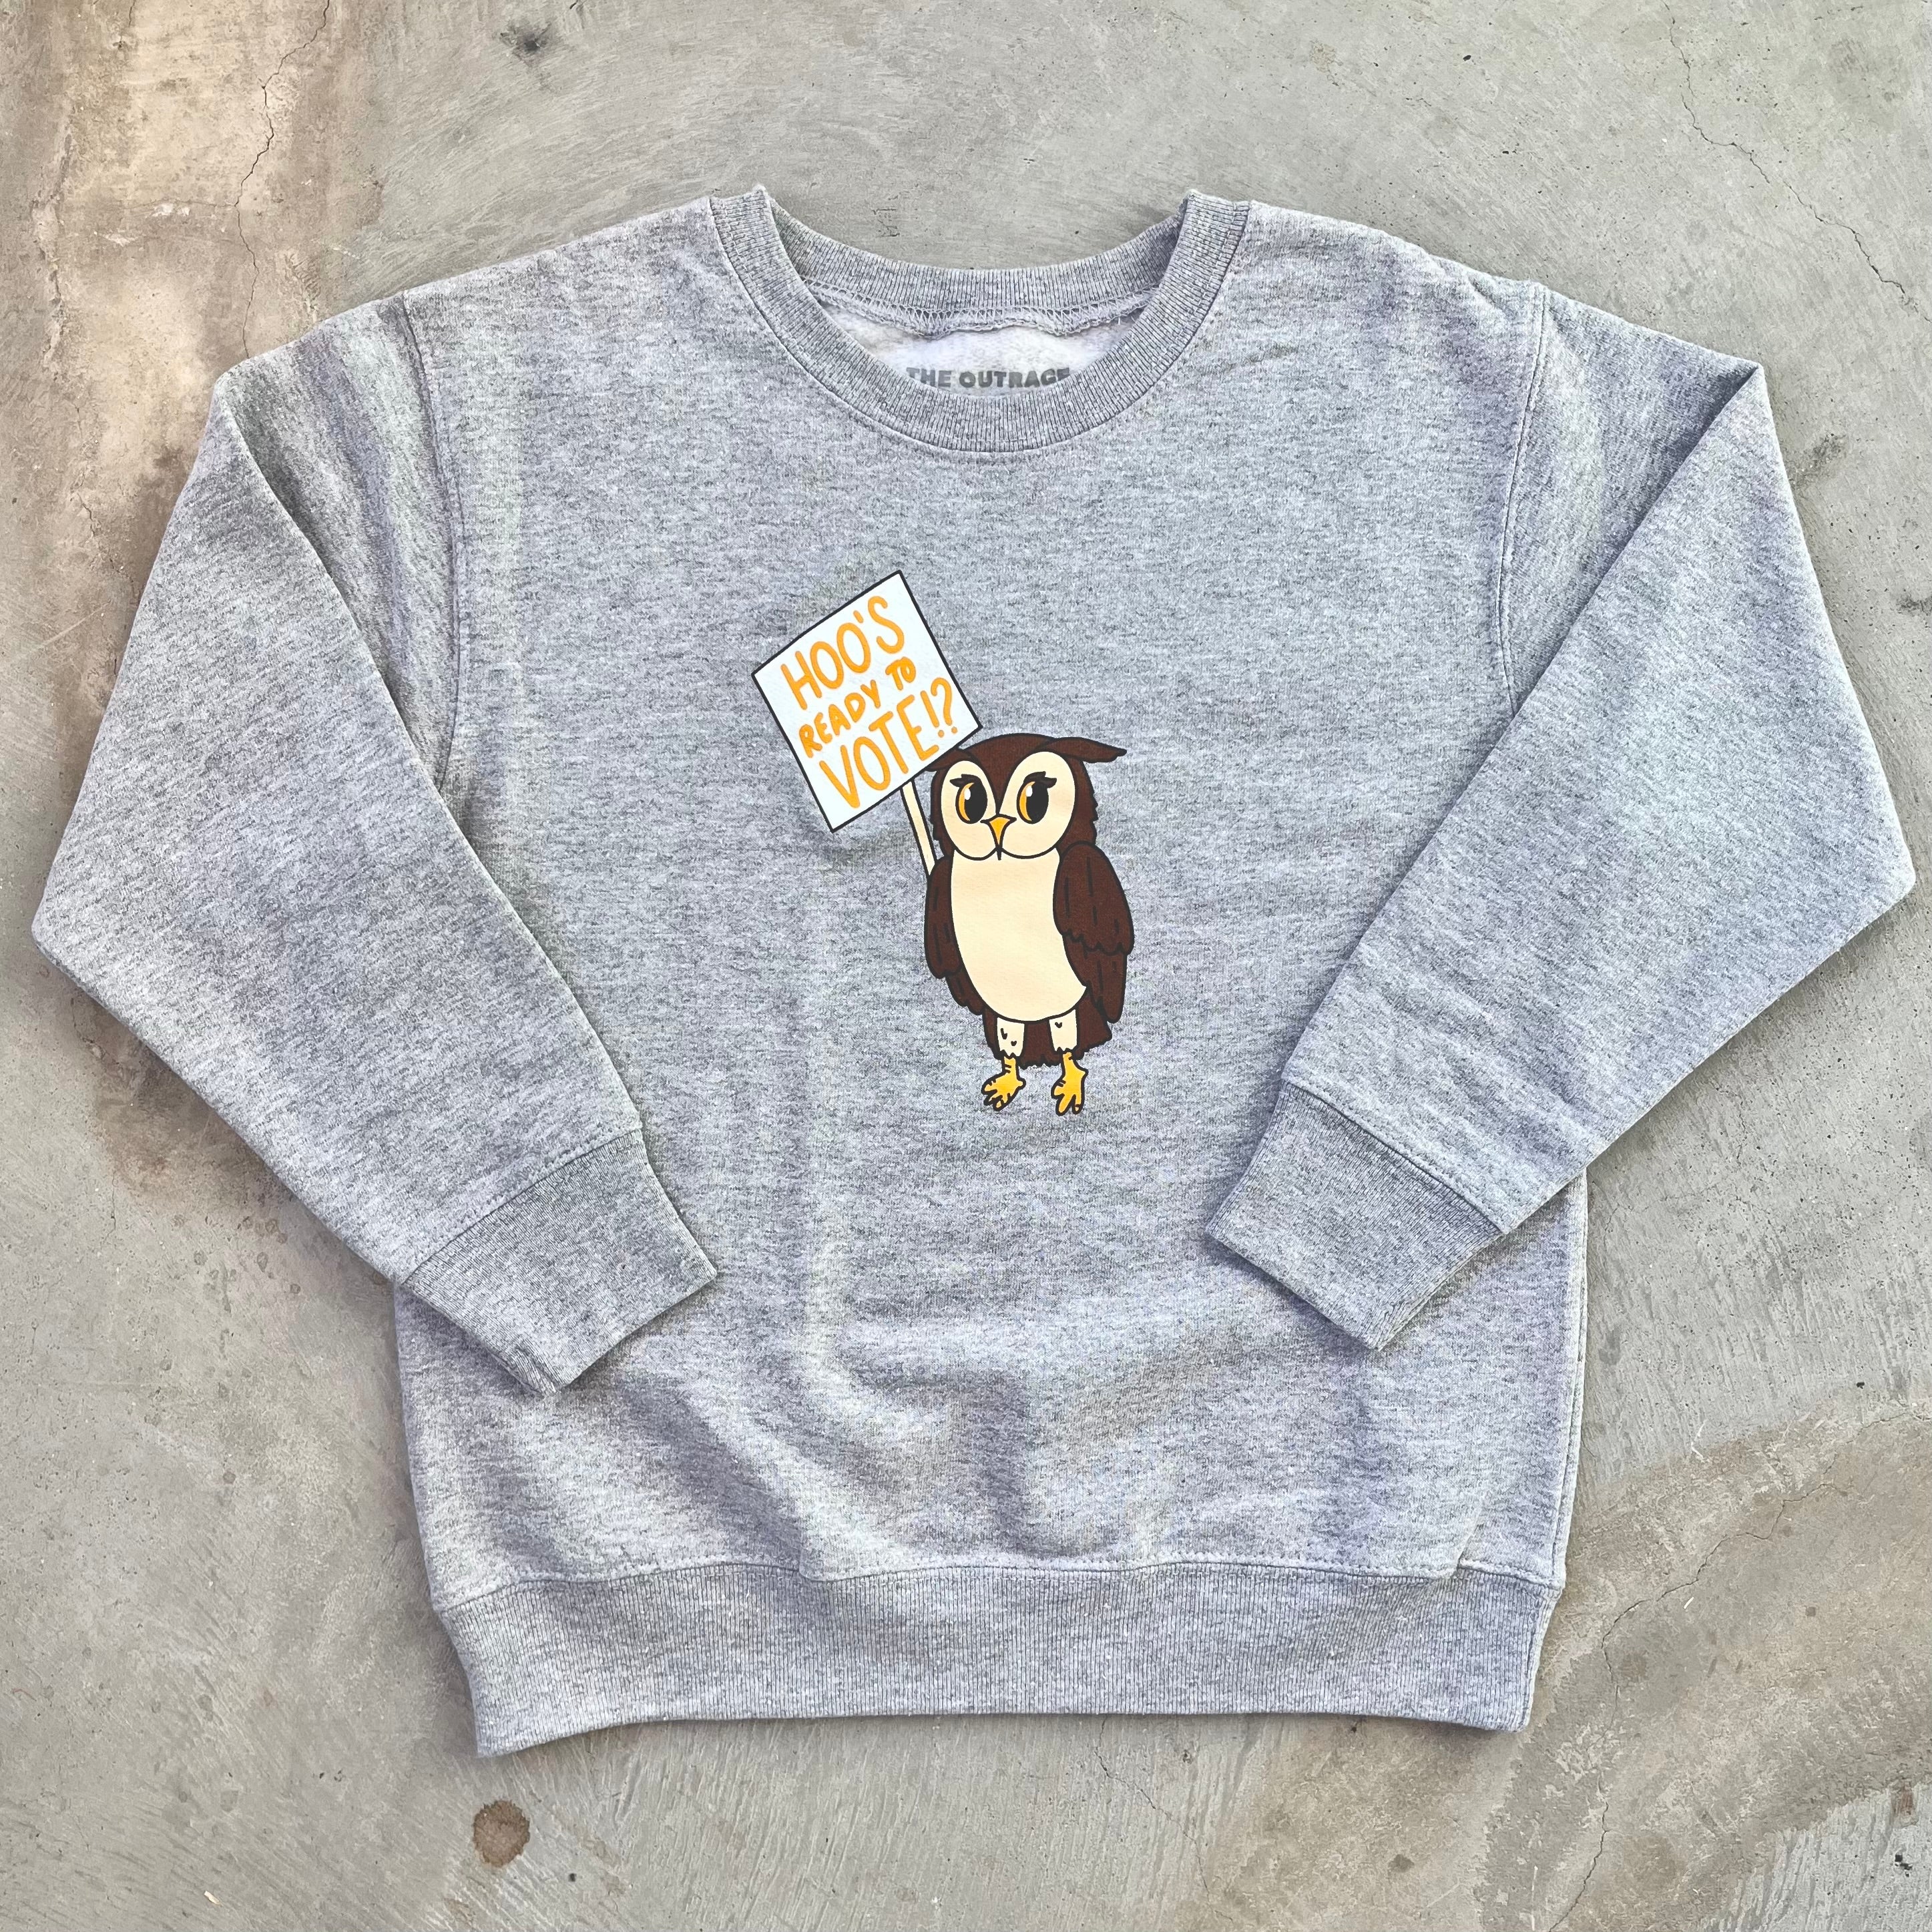 Hoo's Ready To Vote Toddler Crewneck sweatshirt